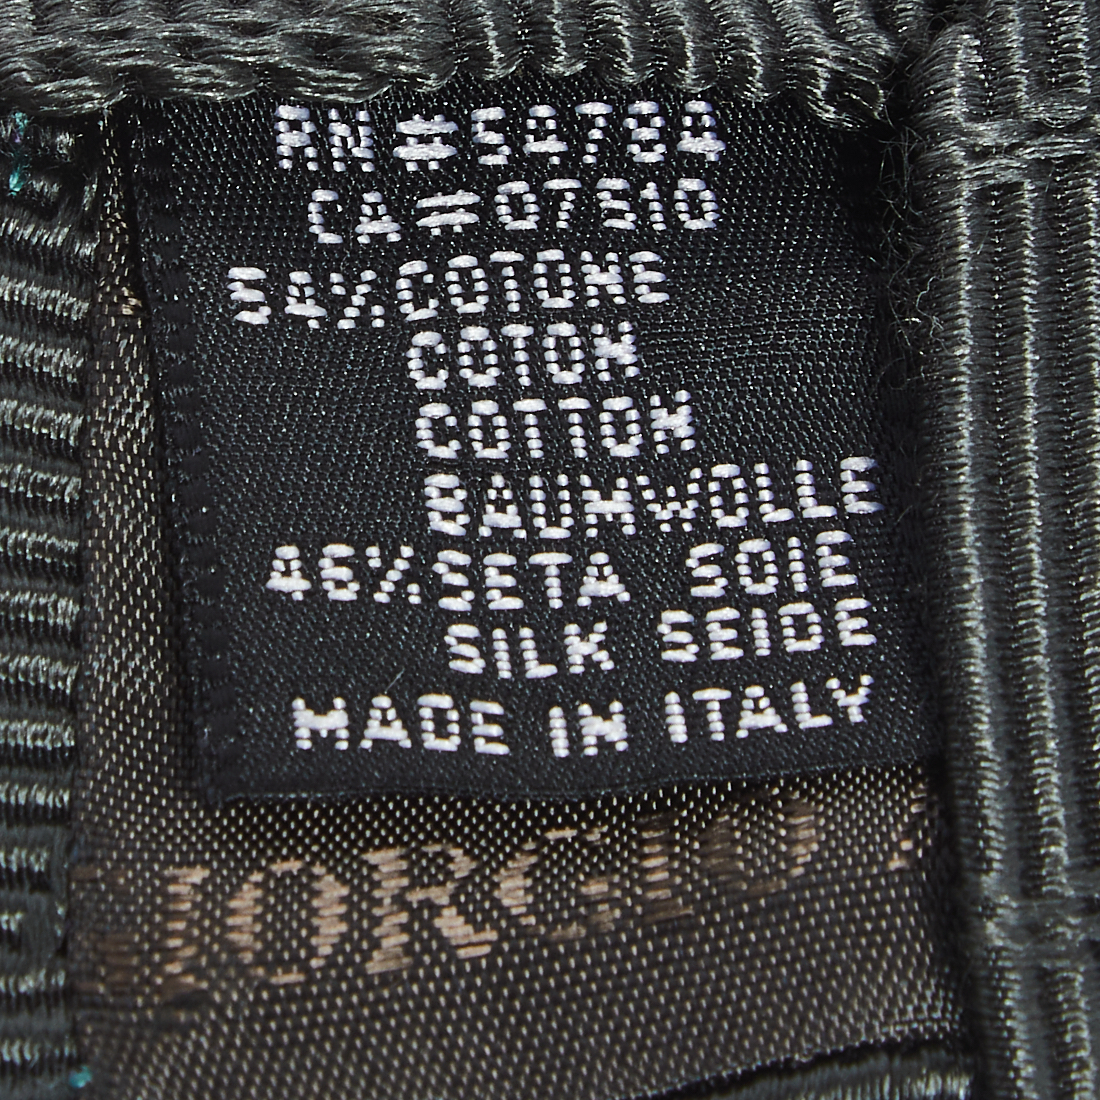 Giorgio Armani Grey Cotton & Silk Jacquard Tie